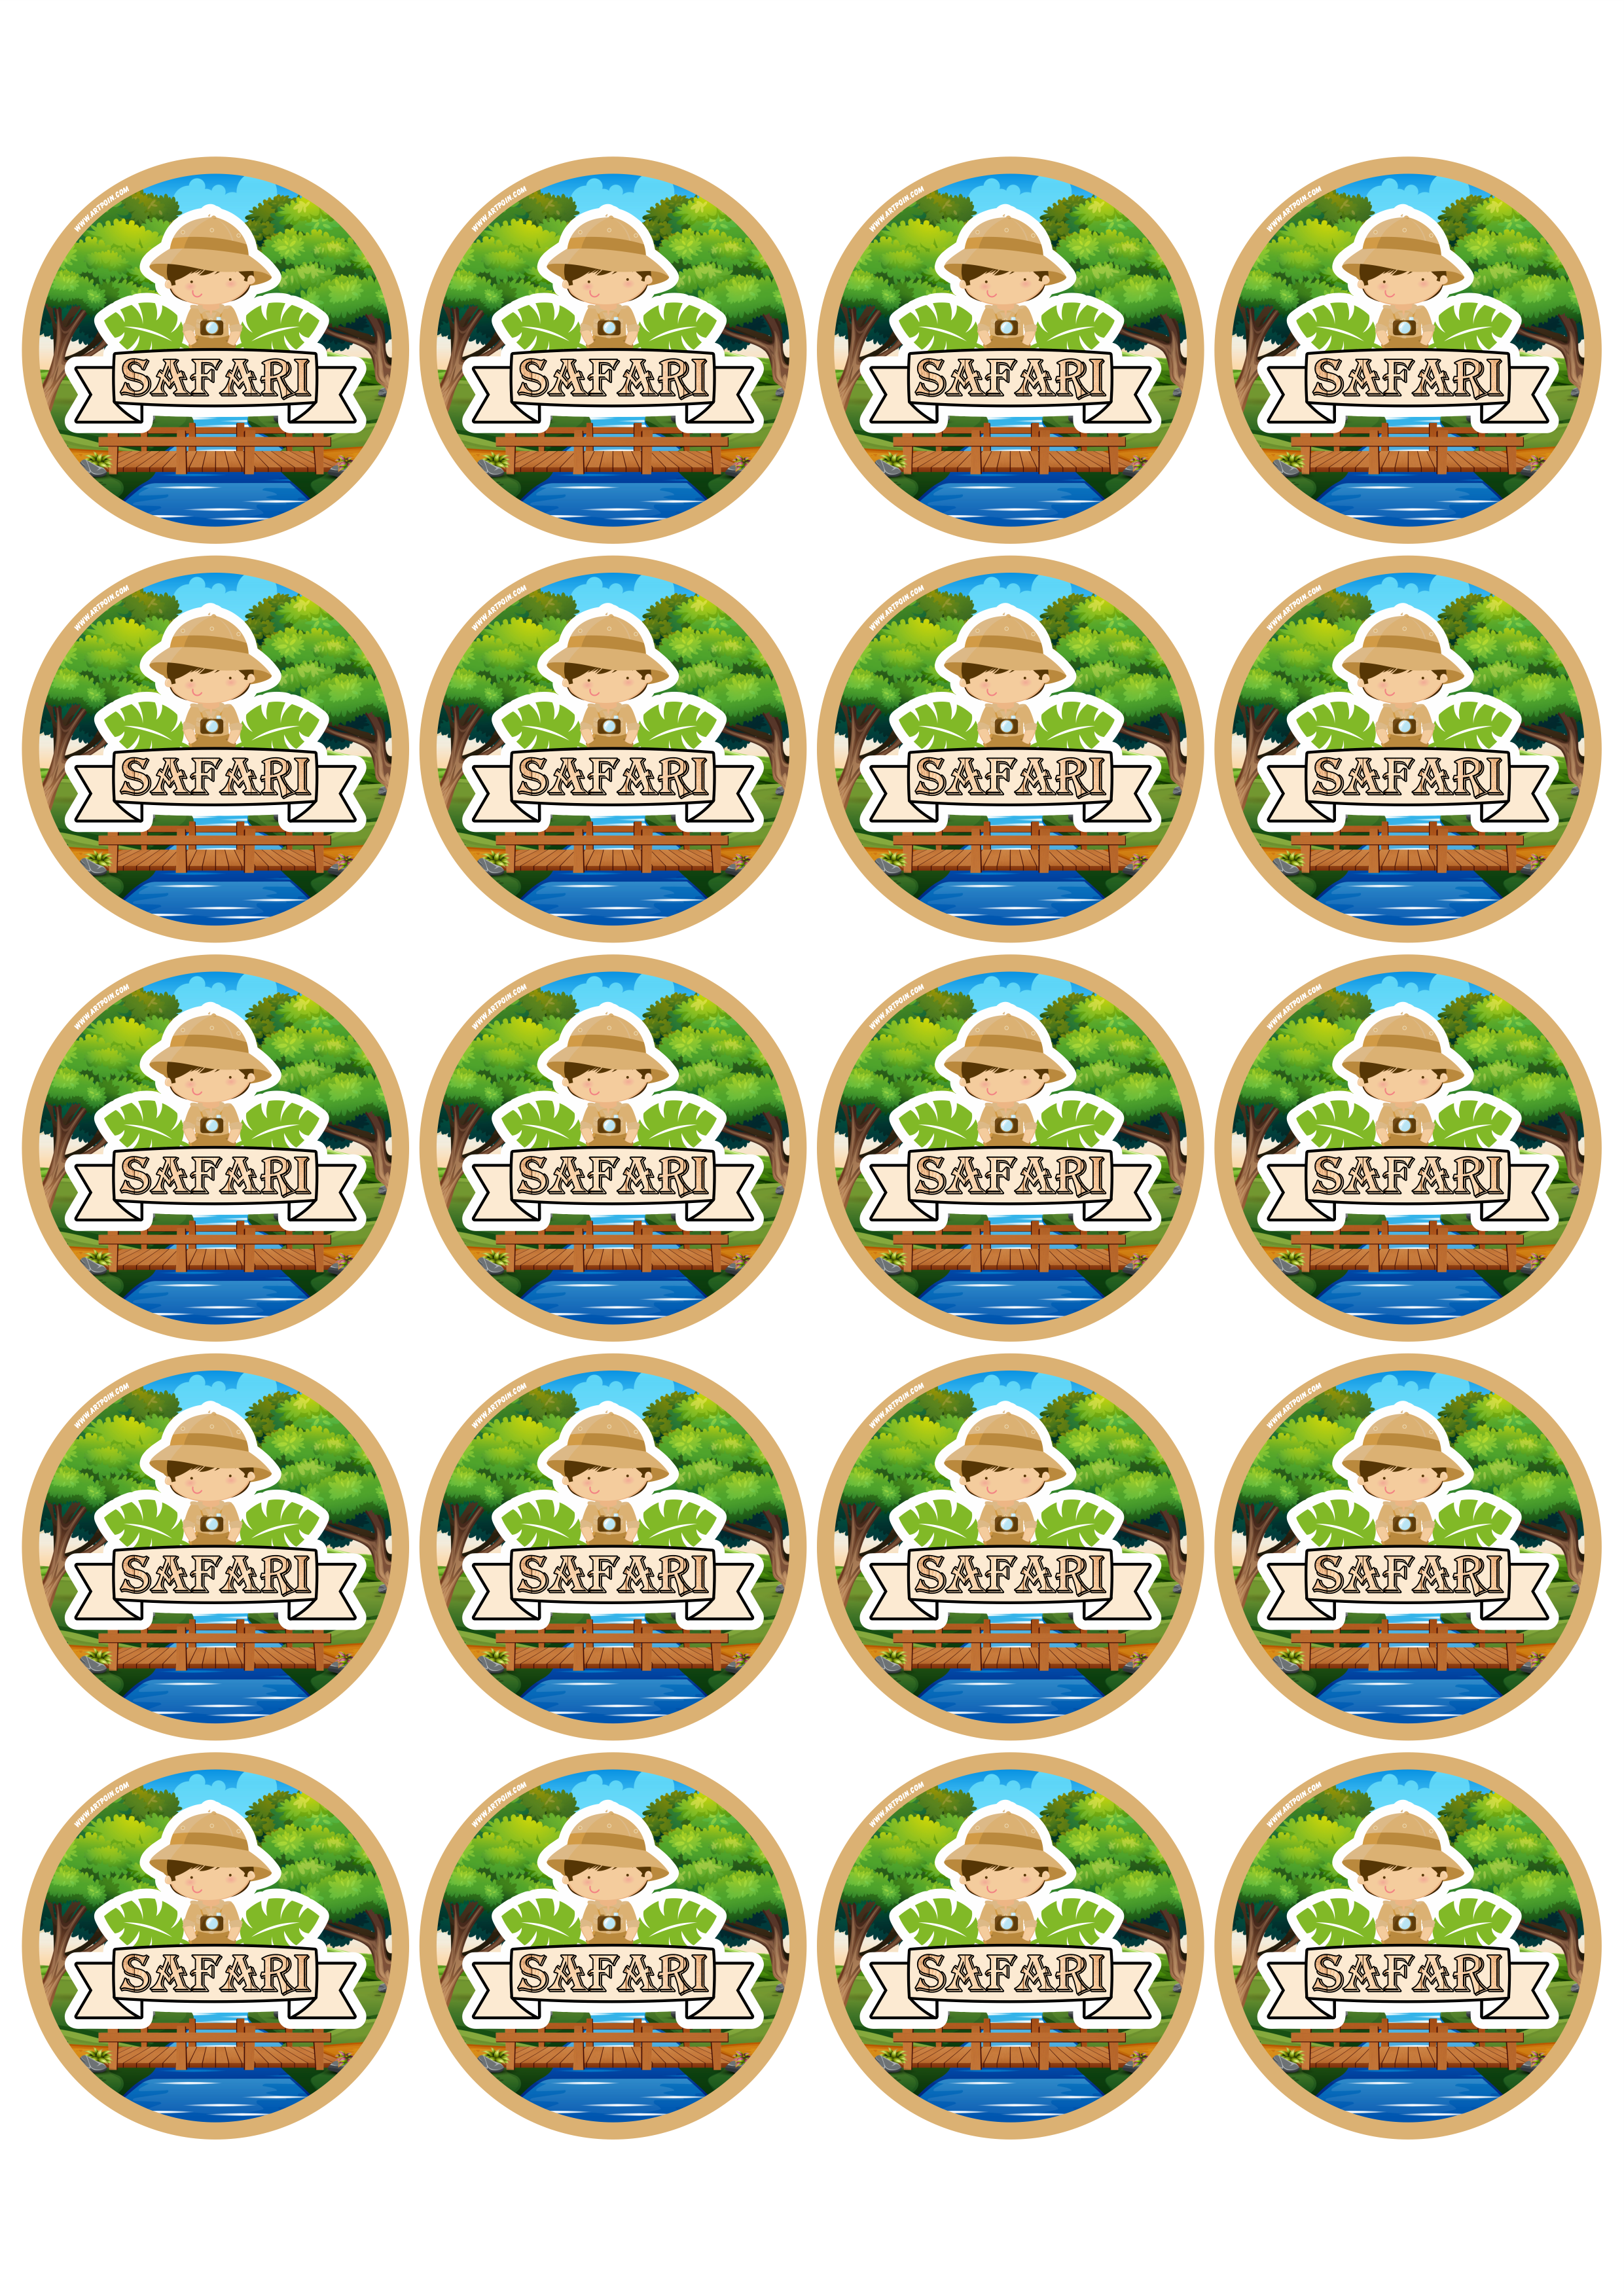 Festa no safari adesivo redondo tag sticker painel para imprimir 20 imagens png